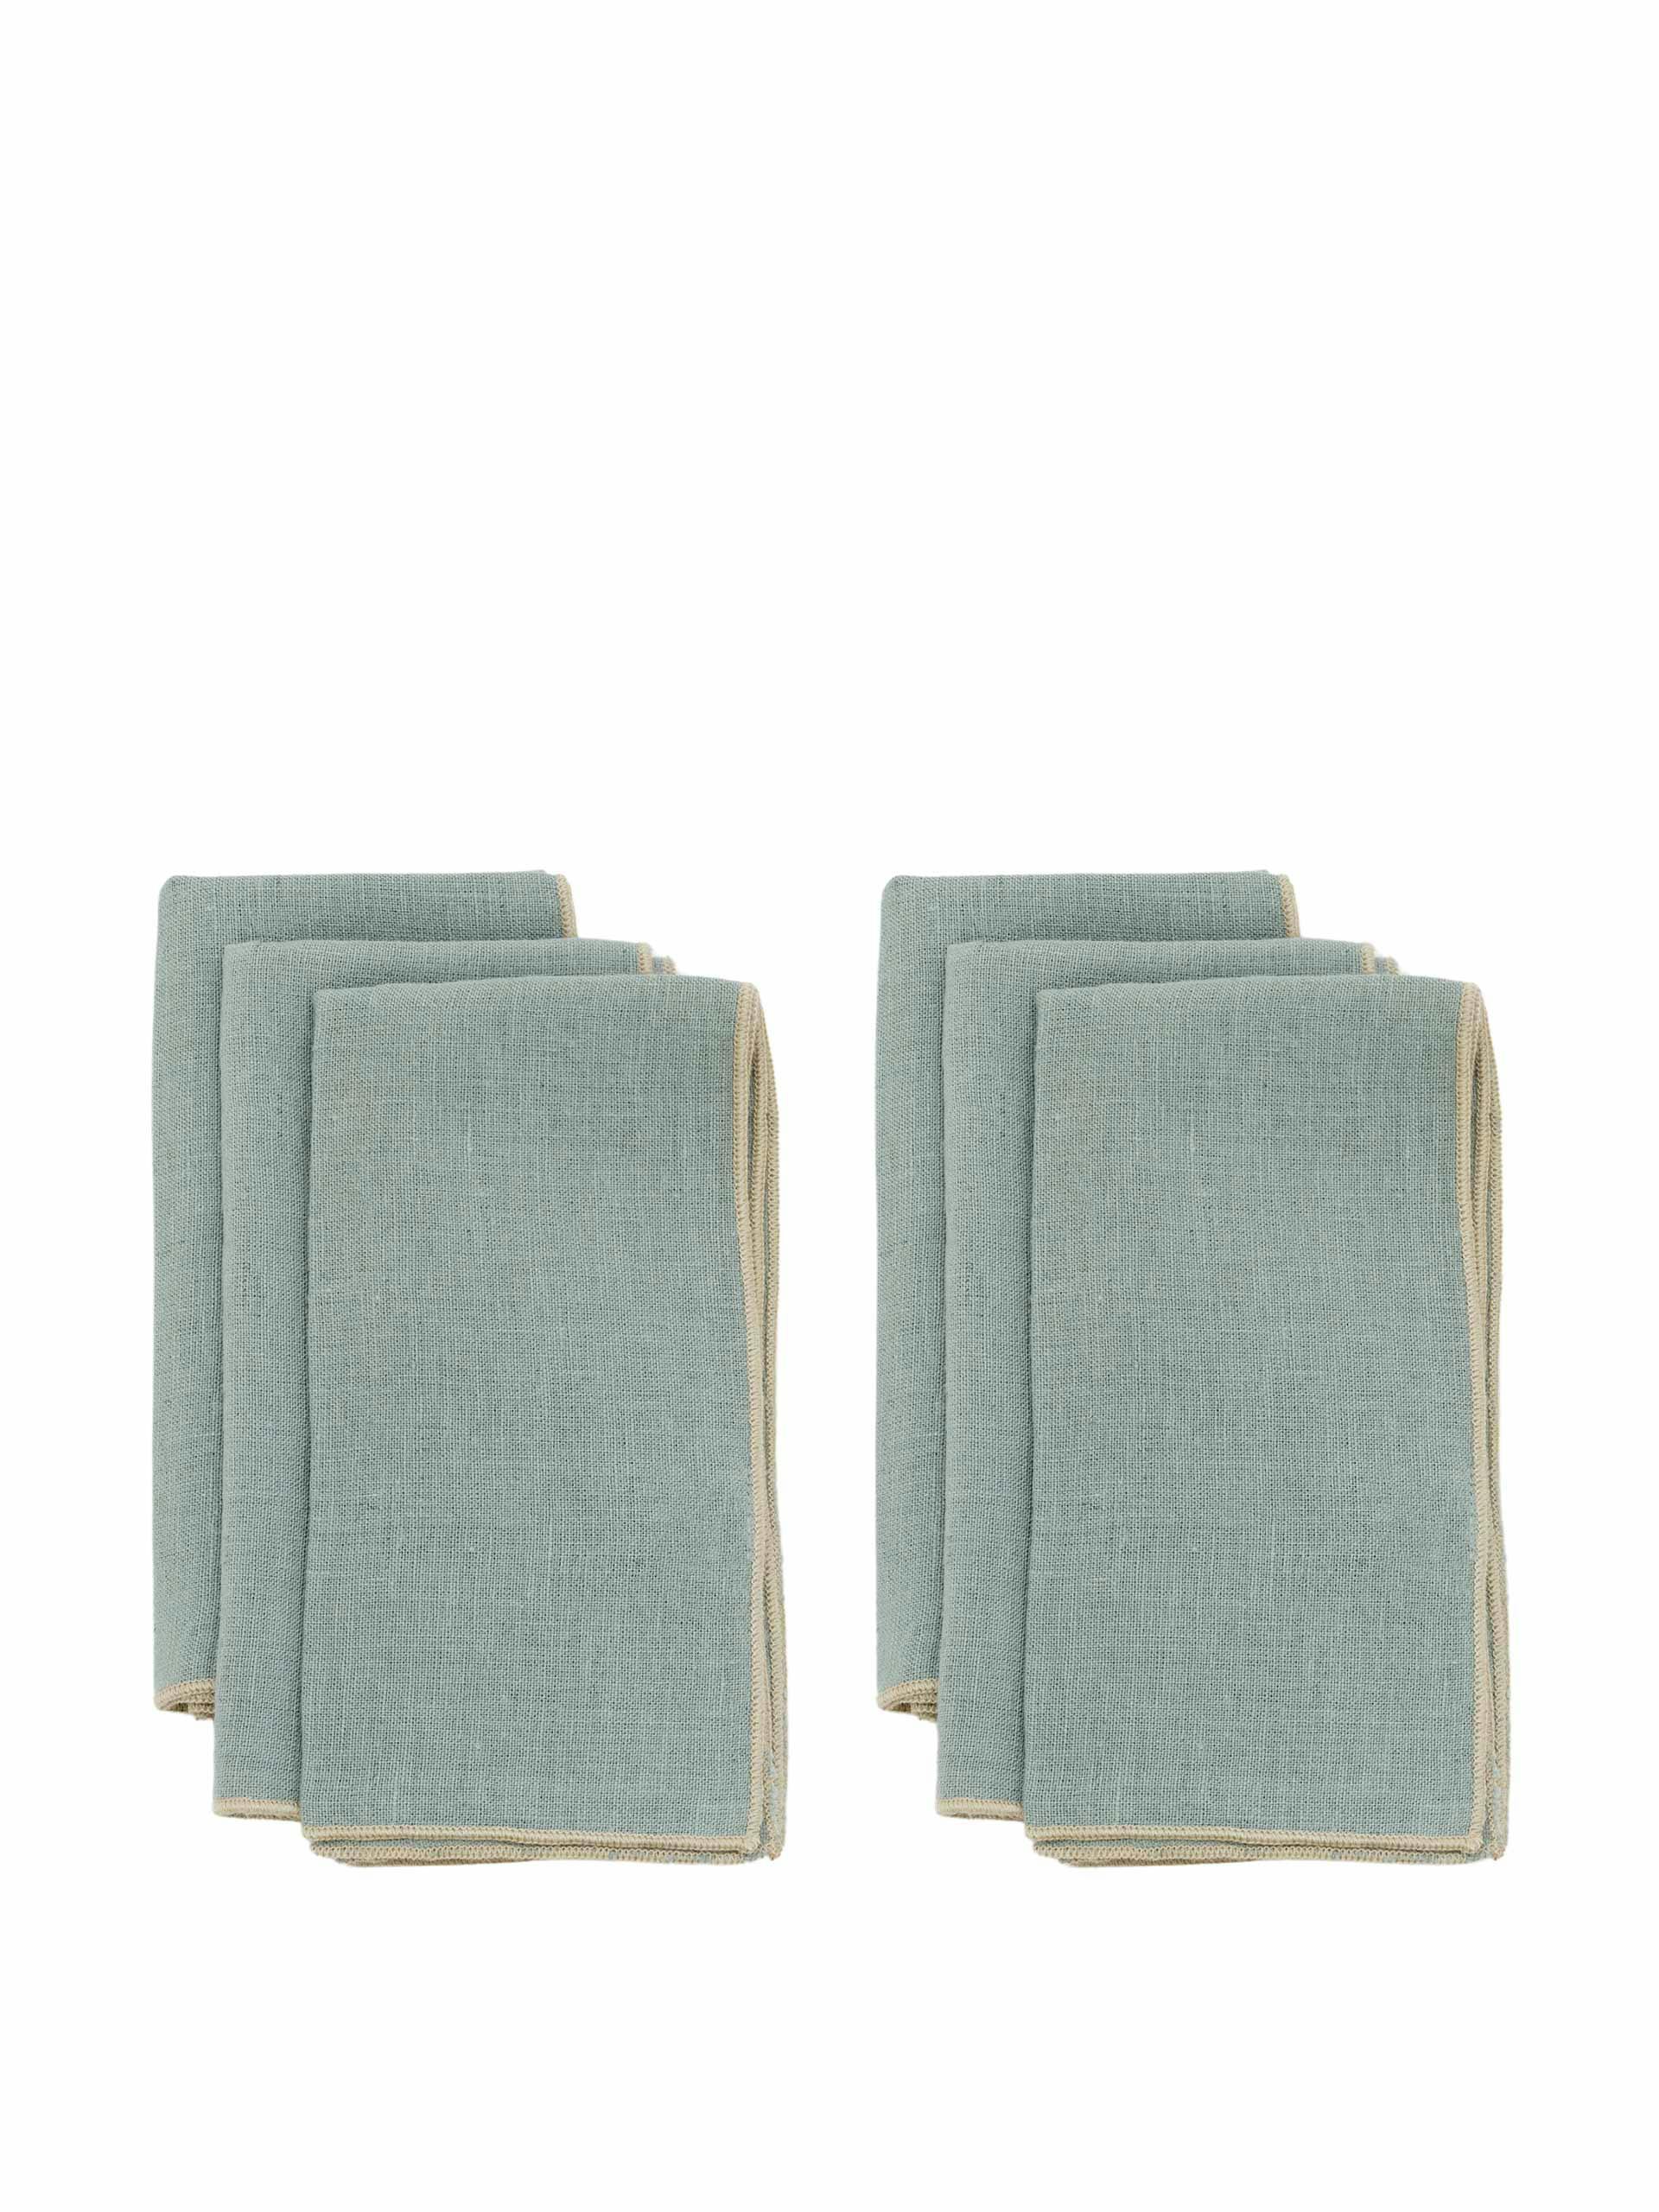 Celadon linen napkins (set of 6)